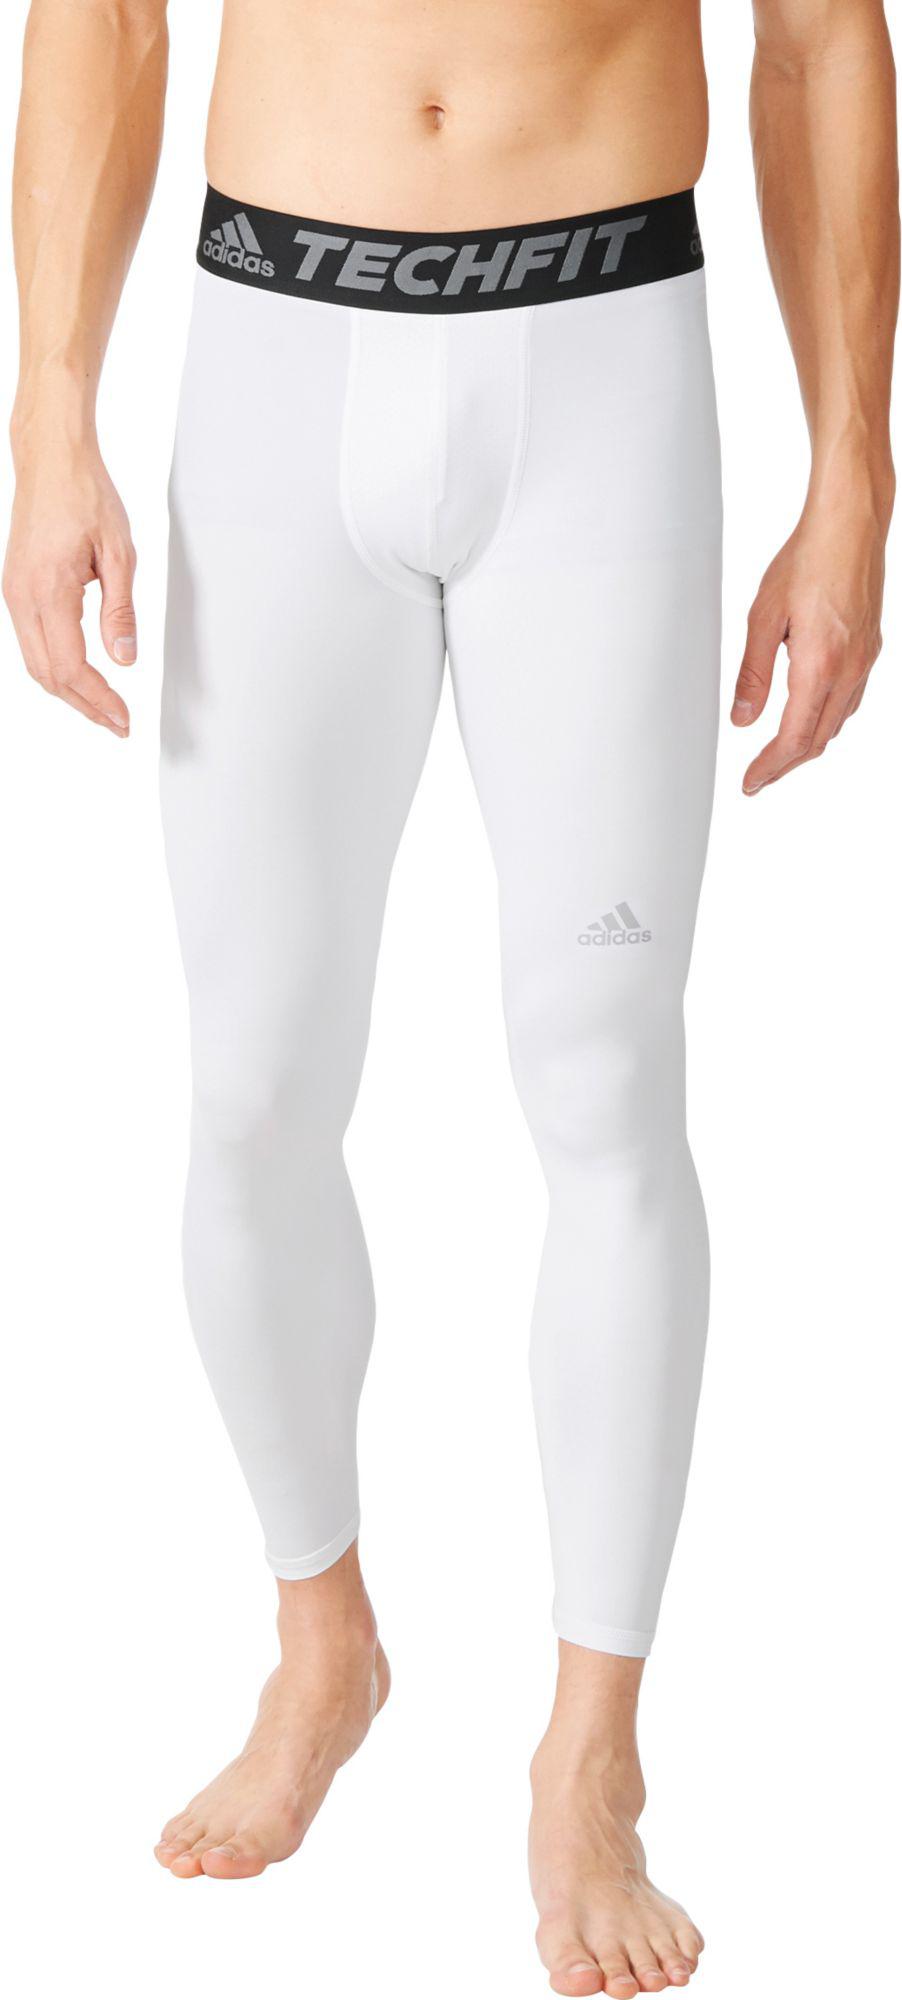 adidas techfit compression leggings